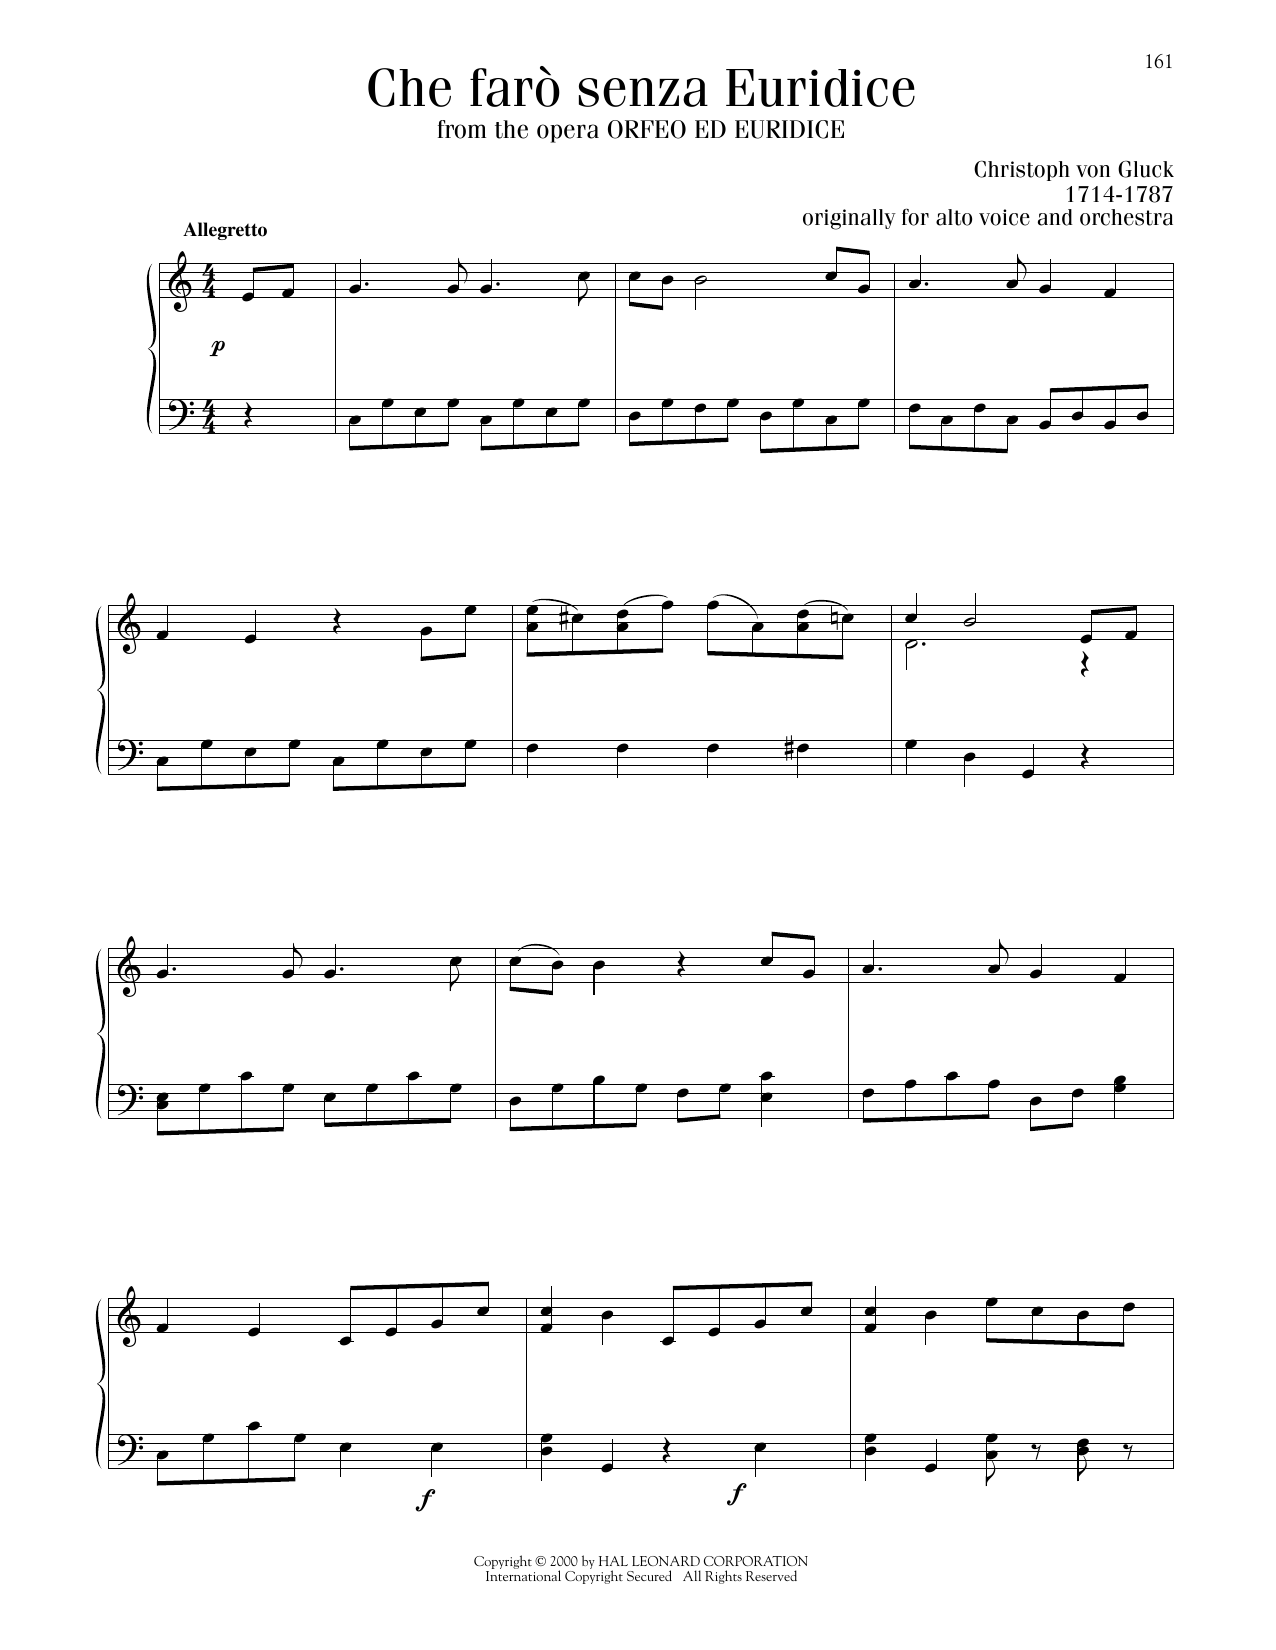 Christoph Willibald Gluck Che Faro Senza Euridice? (Orpheus And Eurydice) sheet music notes printable PDF score